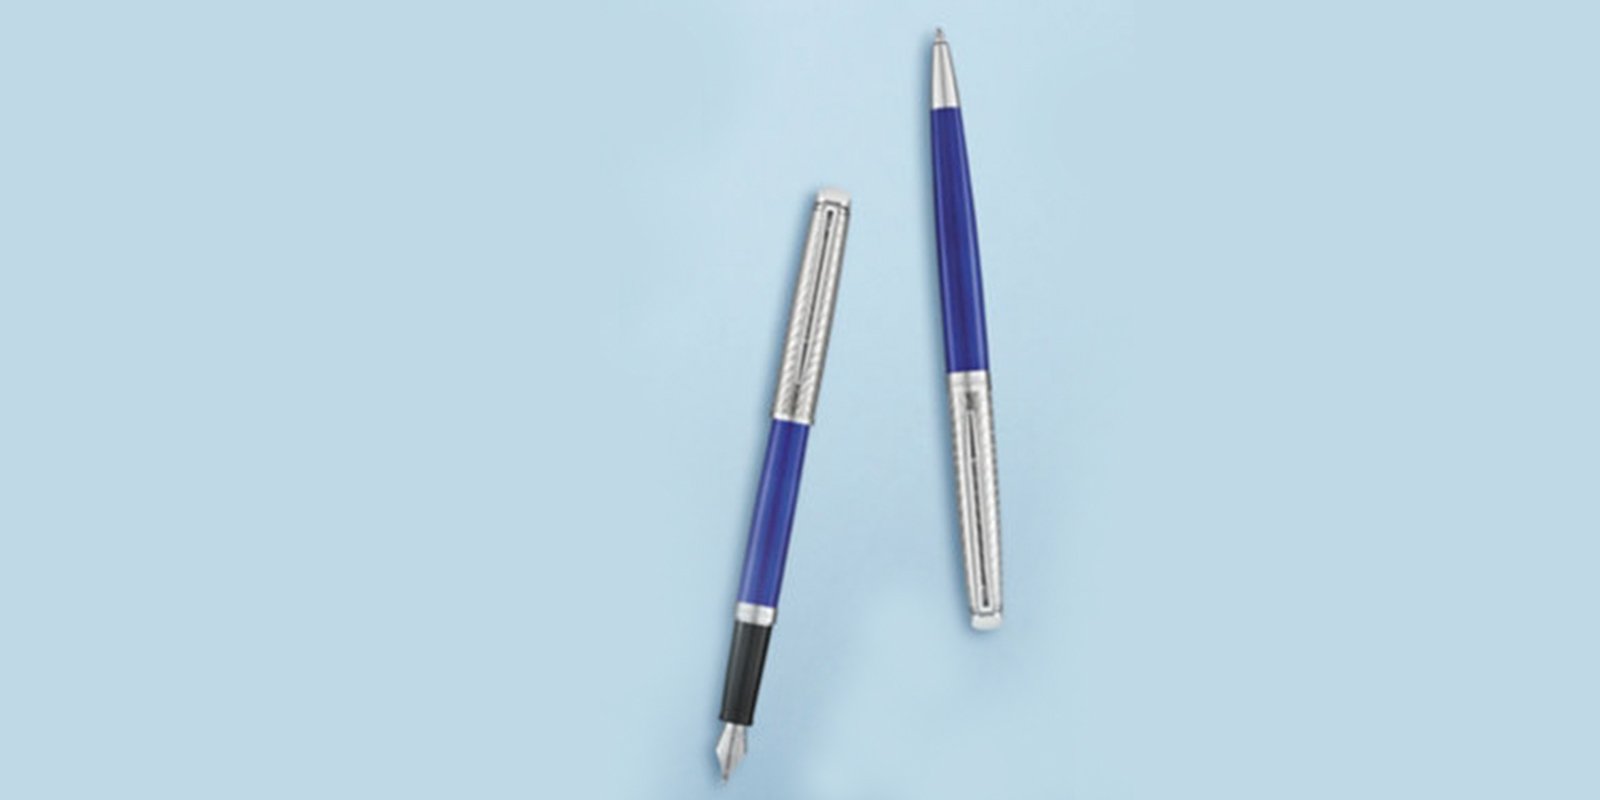 A Hemisphere fountain pen and Hemisphere ballpoint pen laid on a surface.